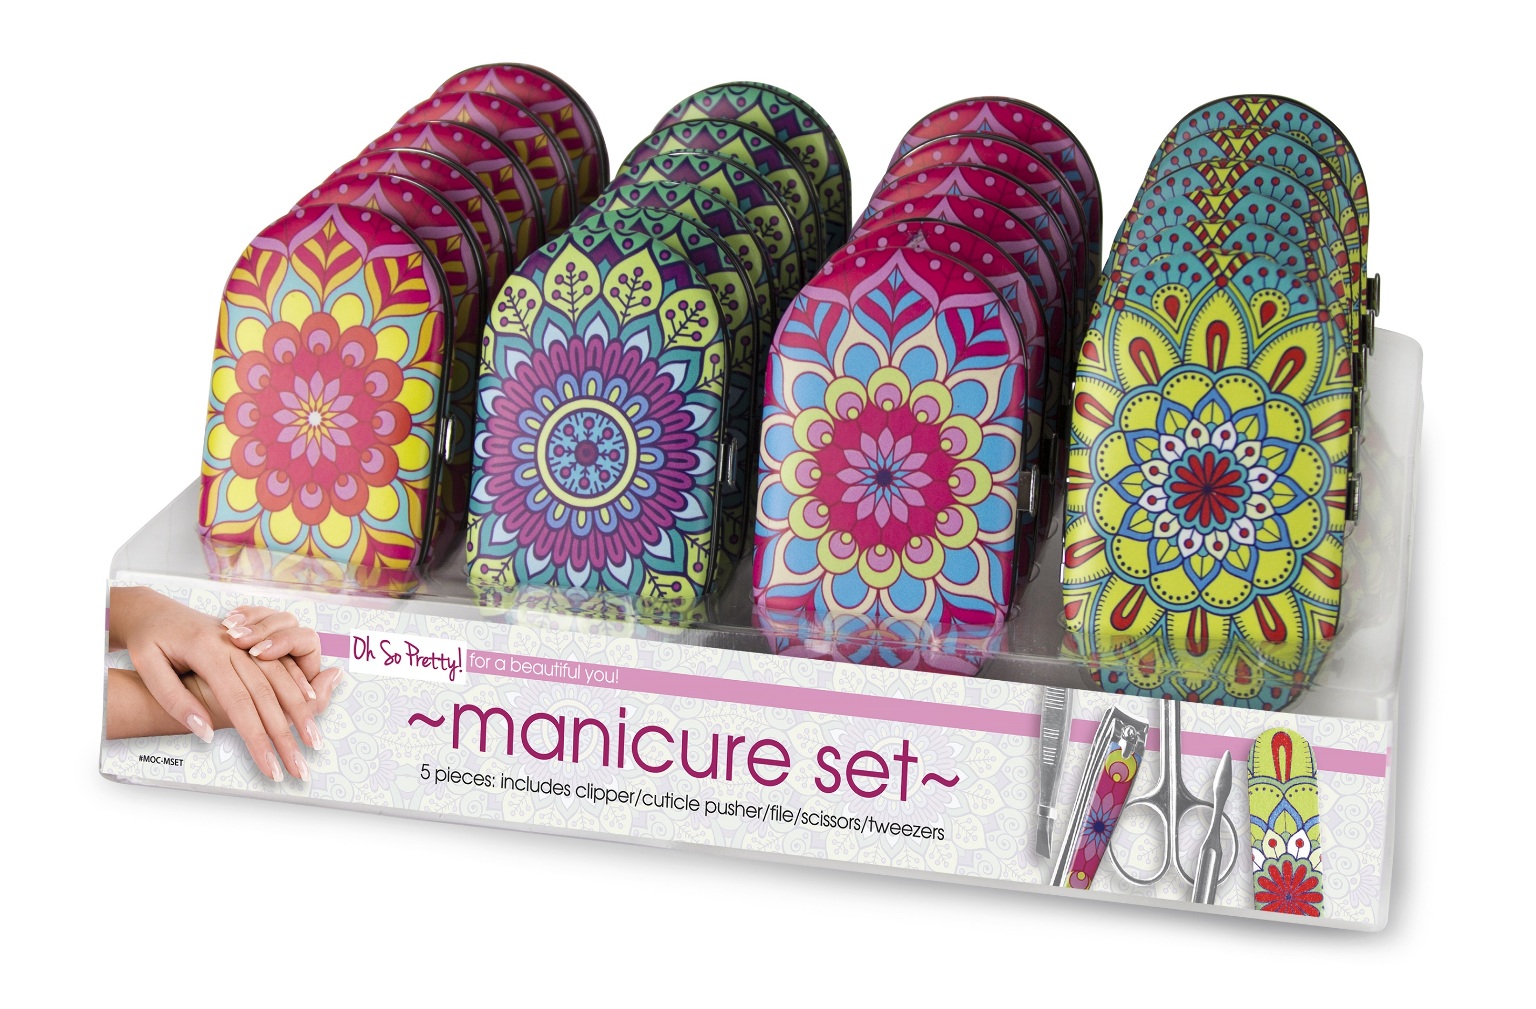 Wholesale Oh So Pretty! 5 Piece Manicure Set(24x.10)